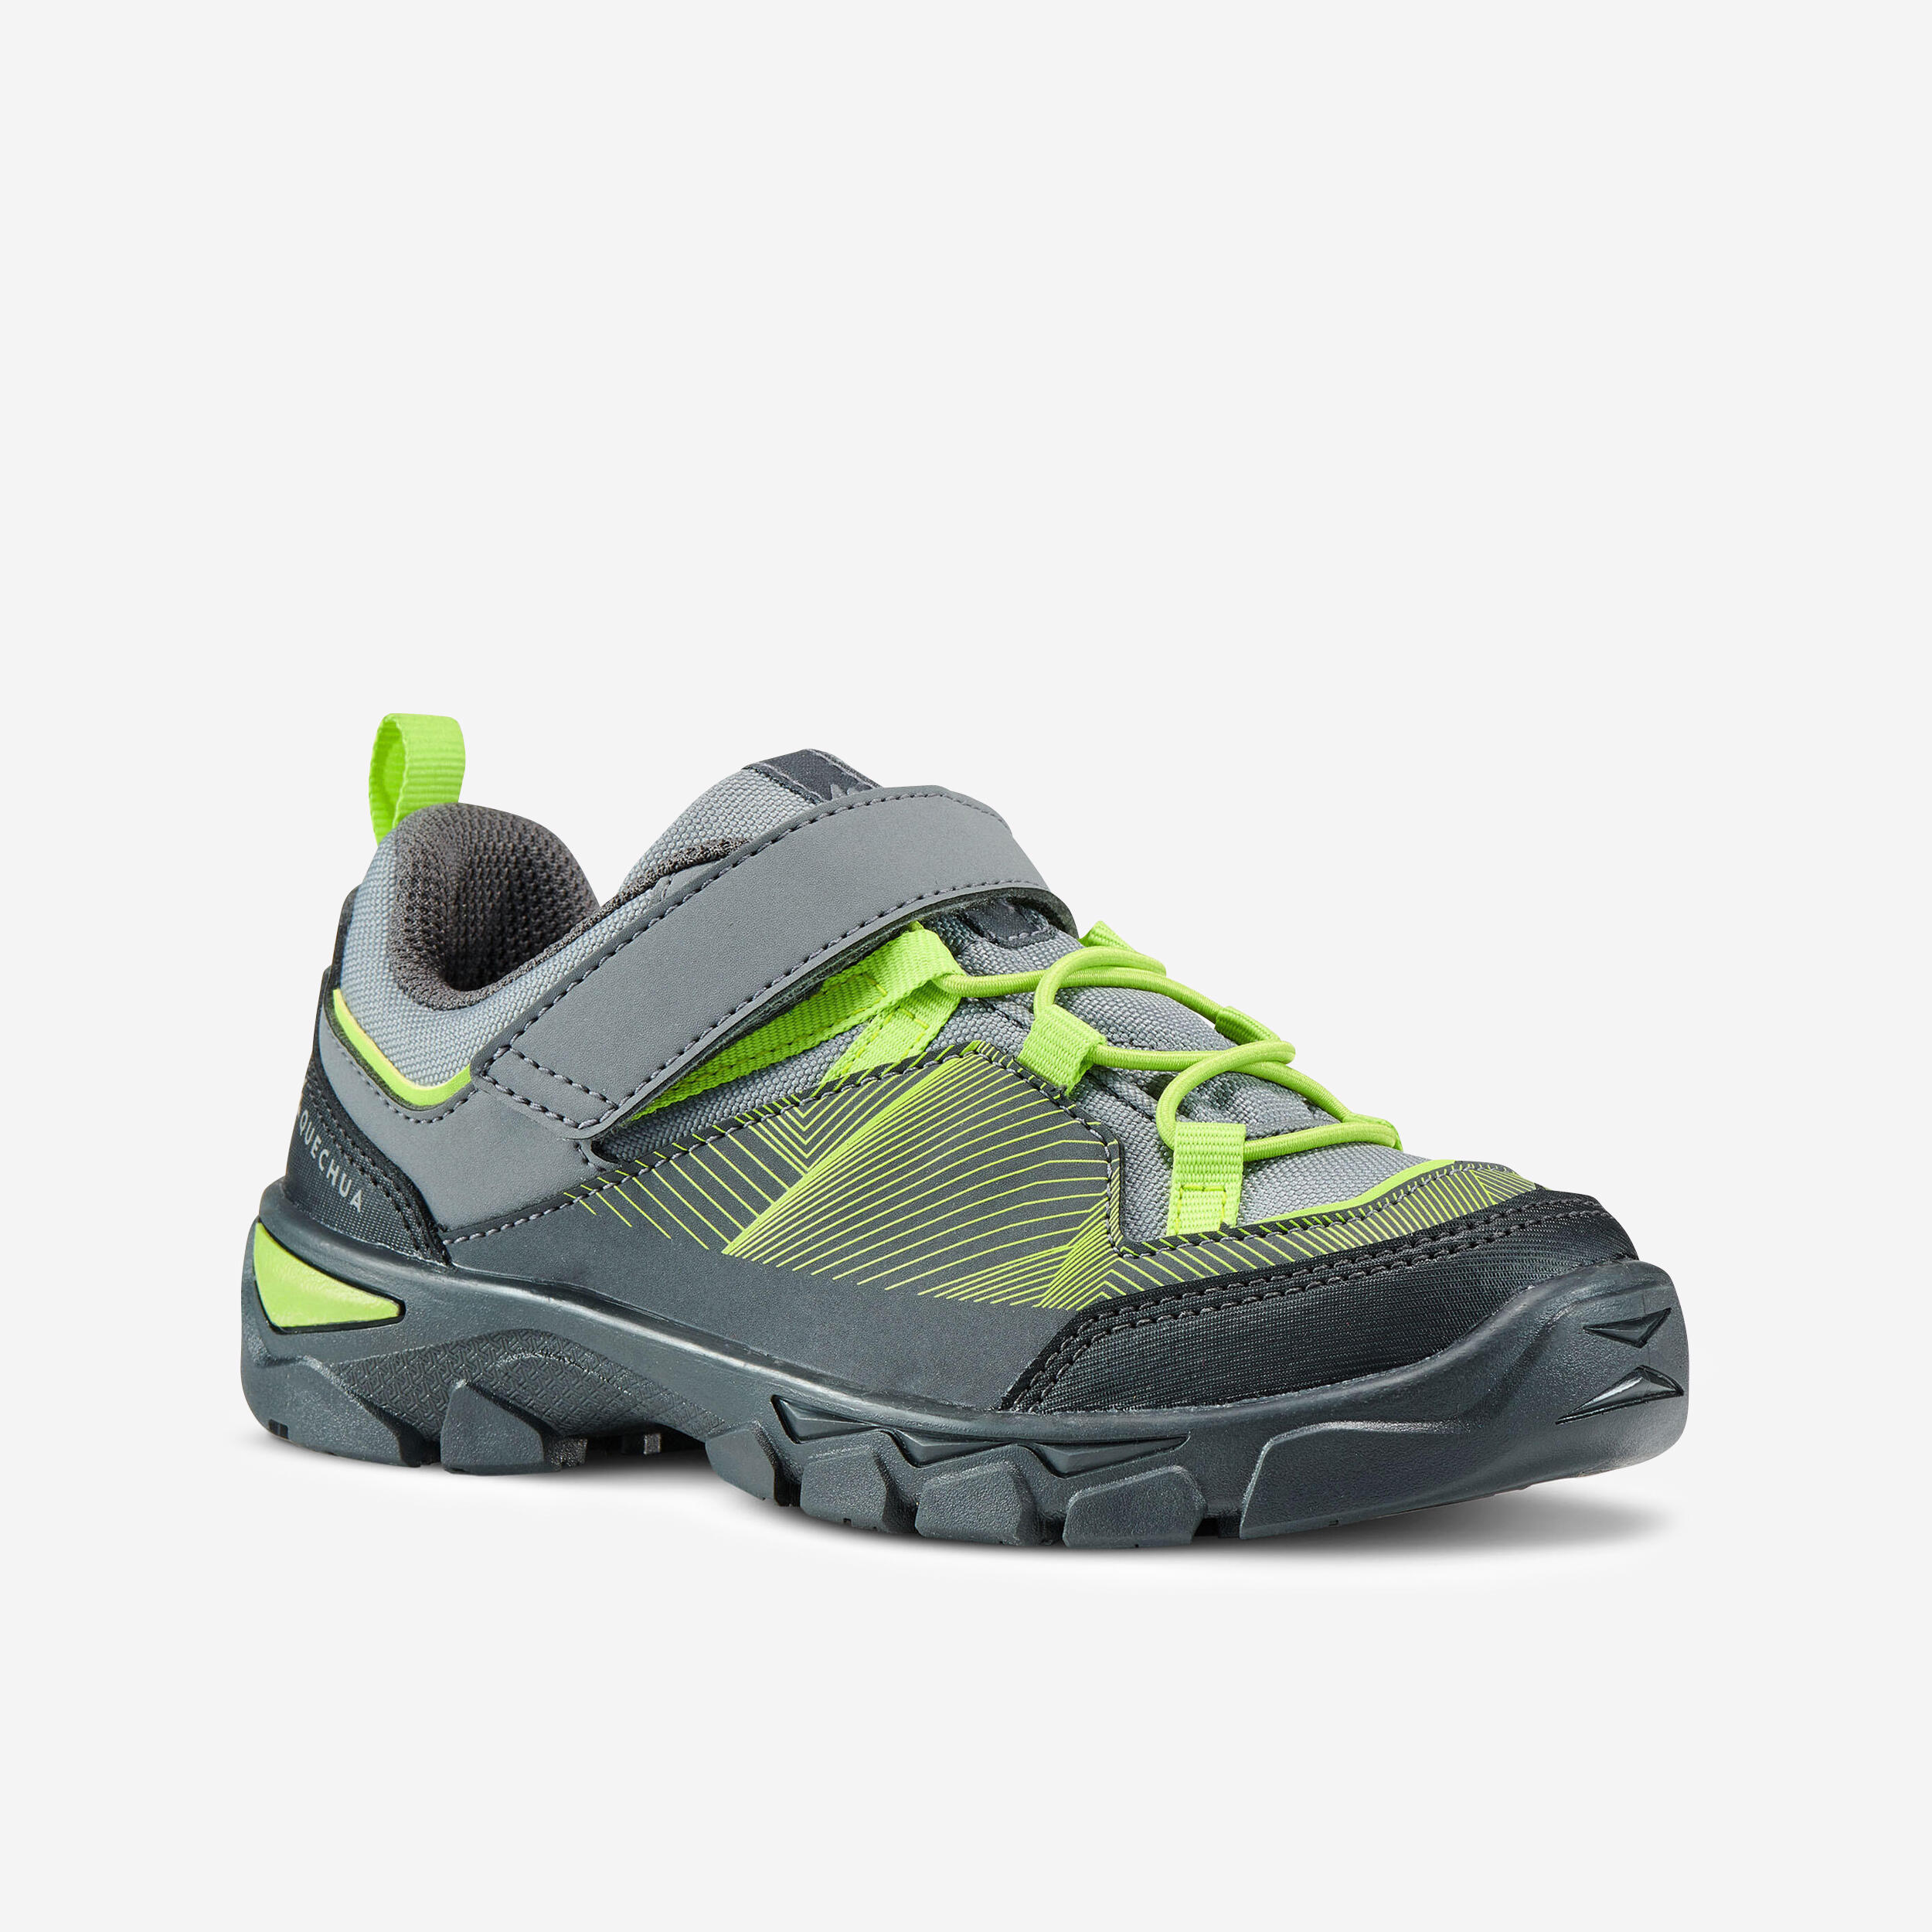 MH120 Low Velcro Hiking Shoes - Kids - QUECHUA